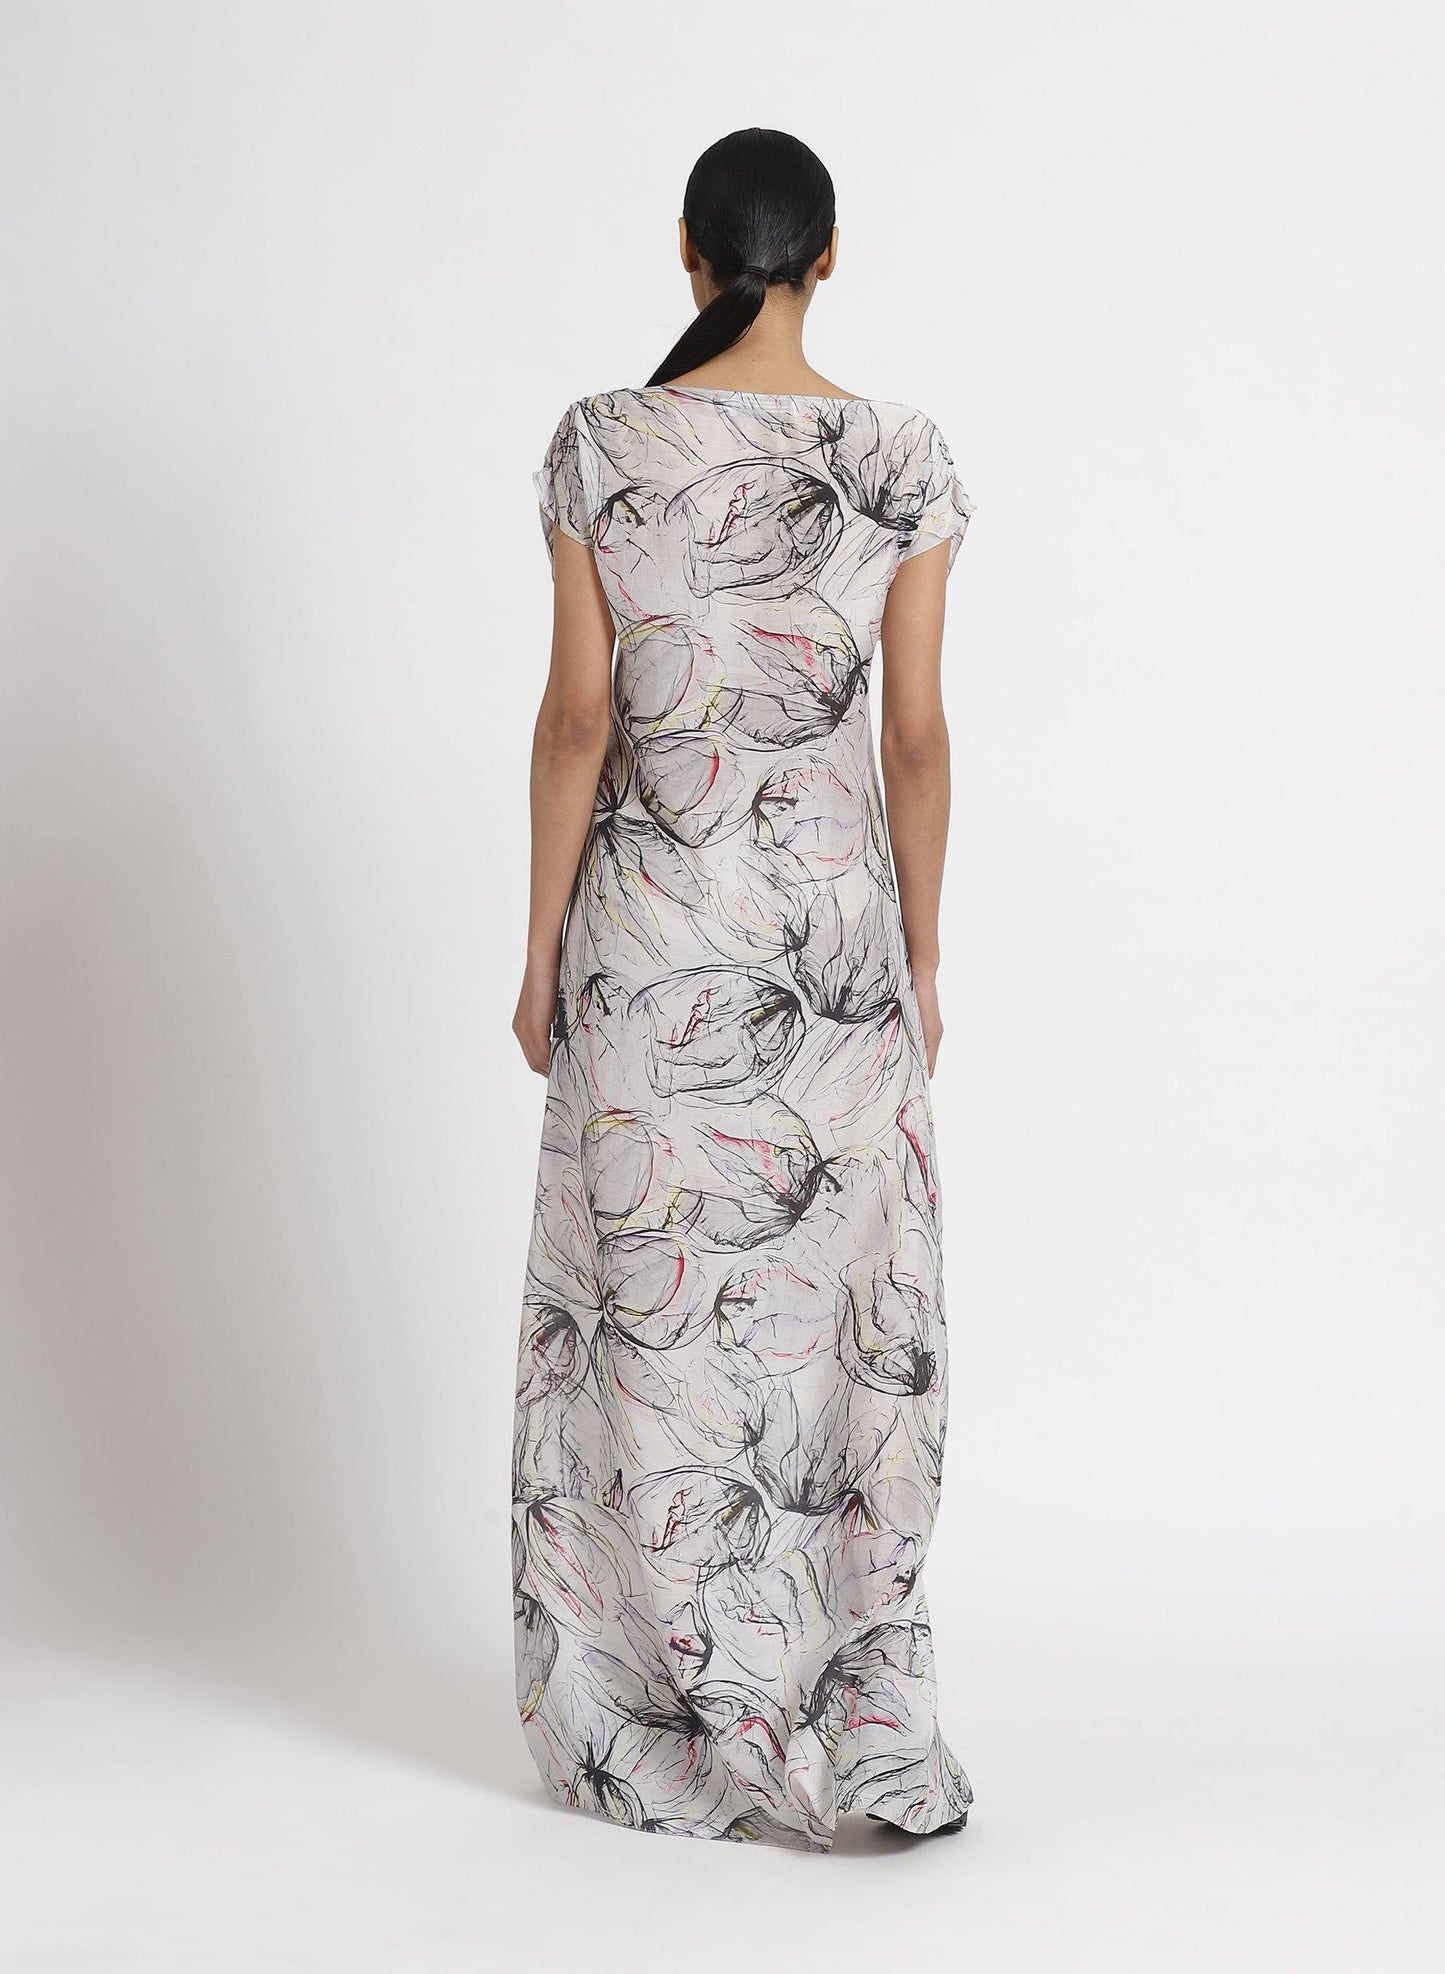 Amary Dress- Genes online store 2020